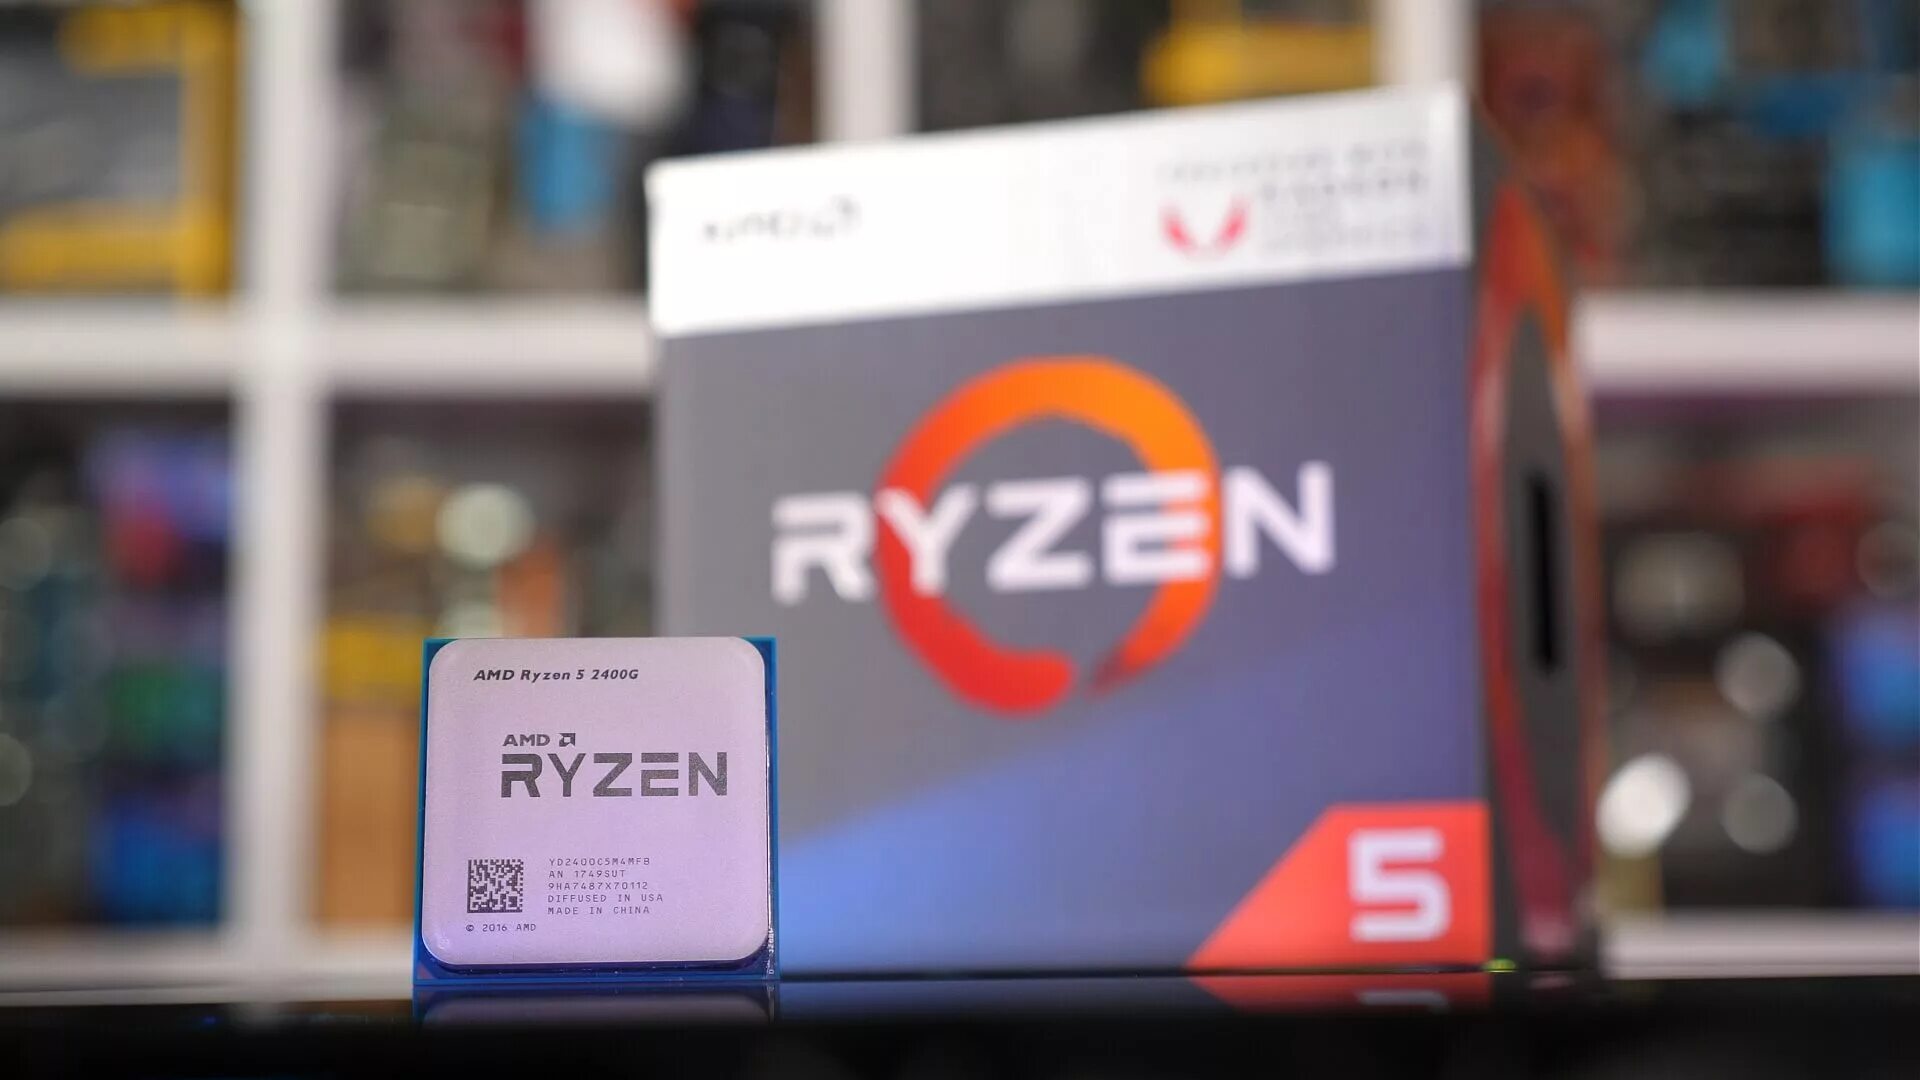 Ryzen 5 2400g. AMD Ryzen 5 Pro 2400g. AMD Ryzen 5 Pro 2400g Box. AMD Risen 5 2400g. Amd ryzen 5 сборка